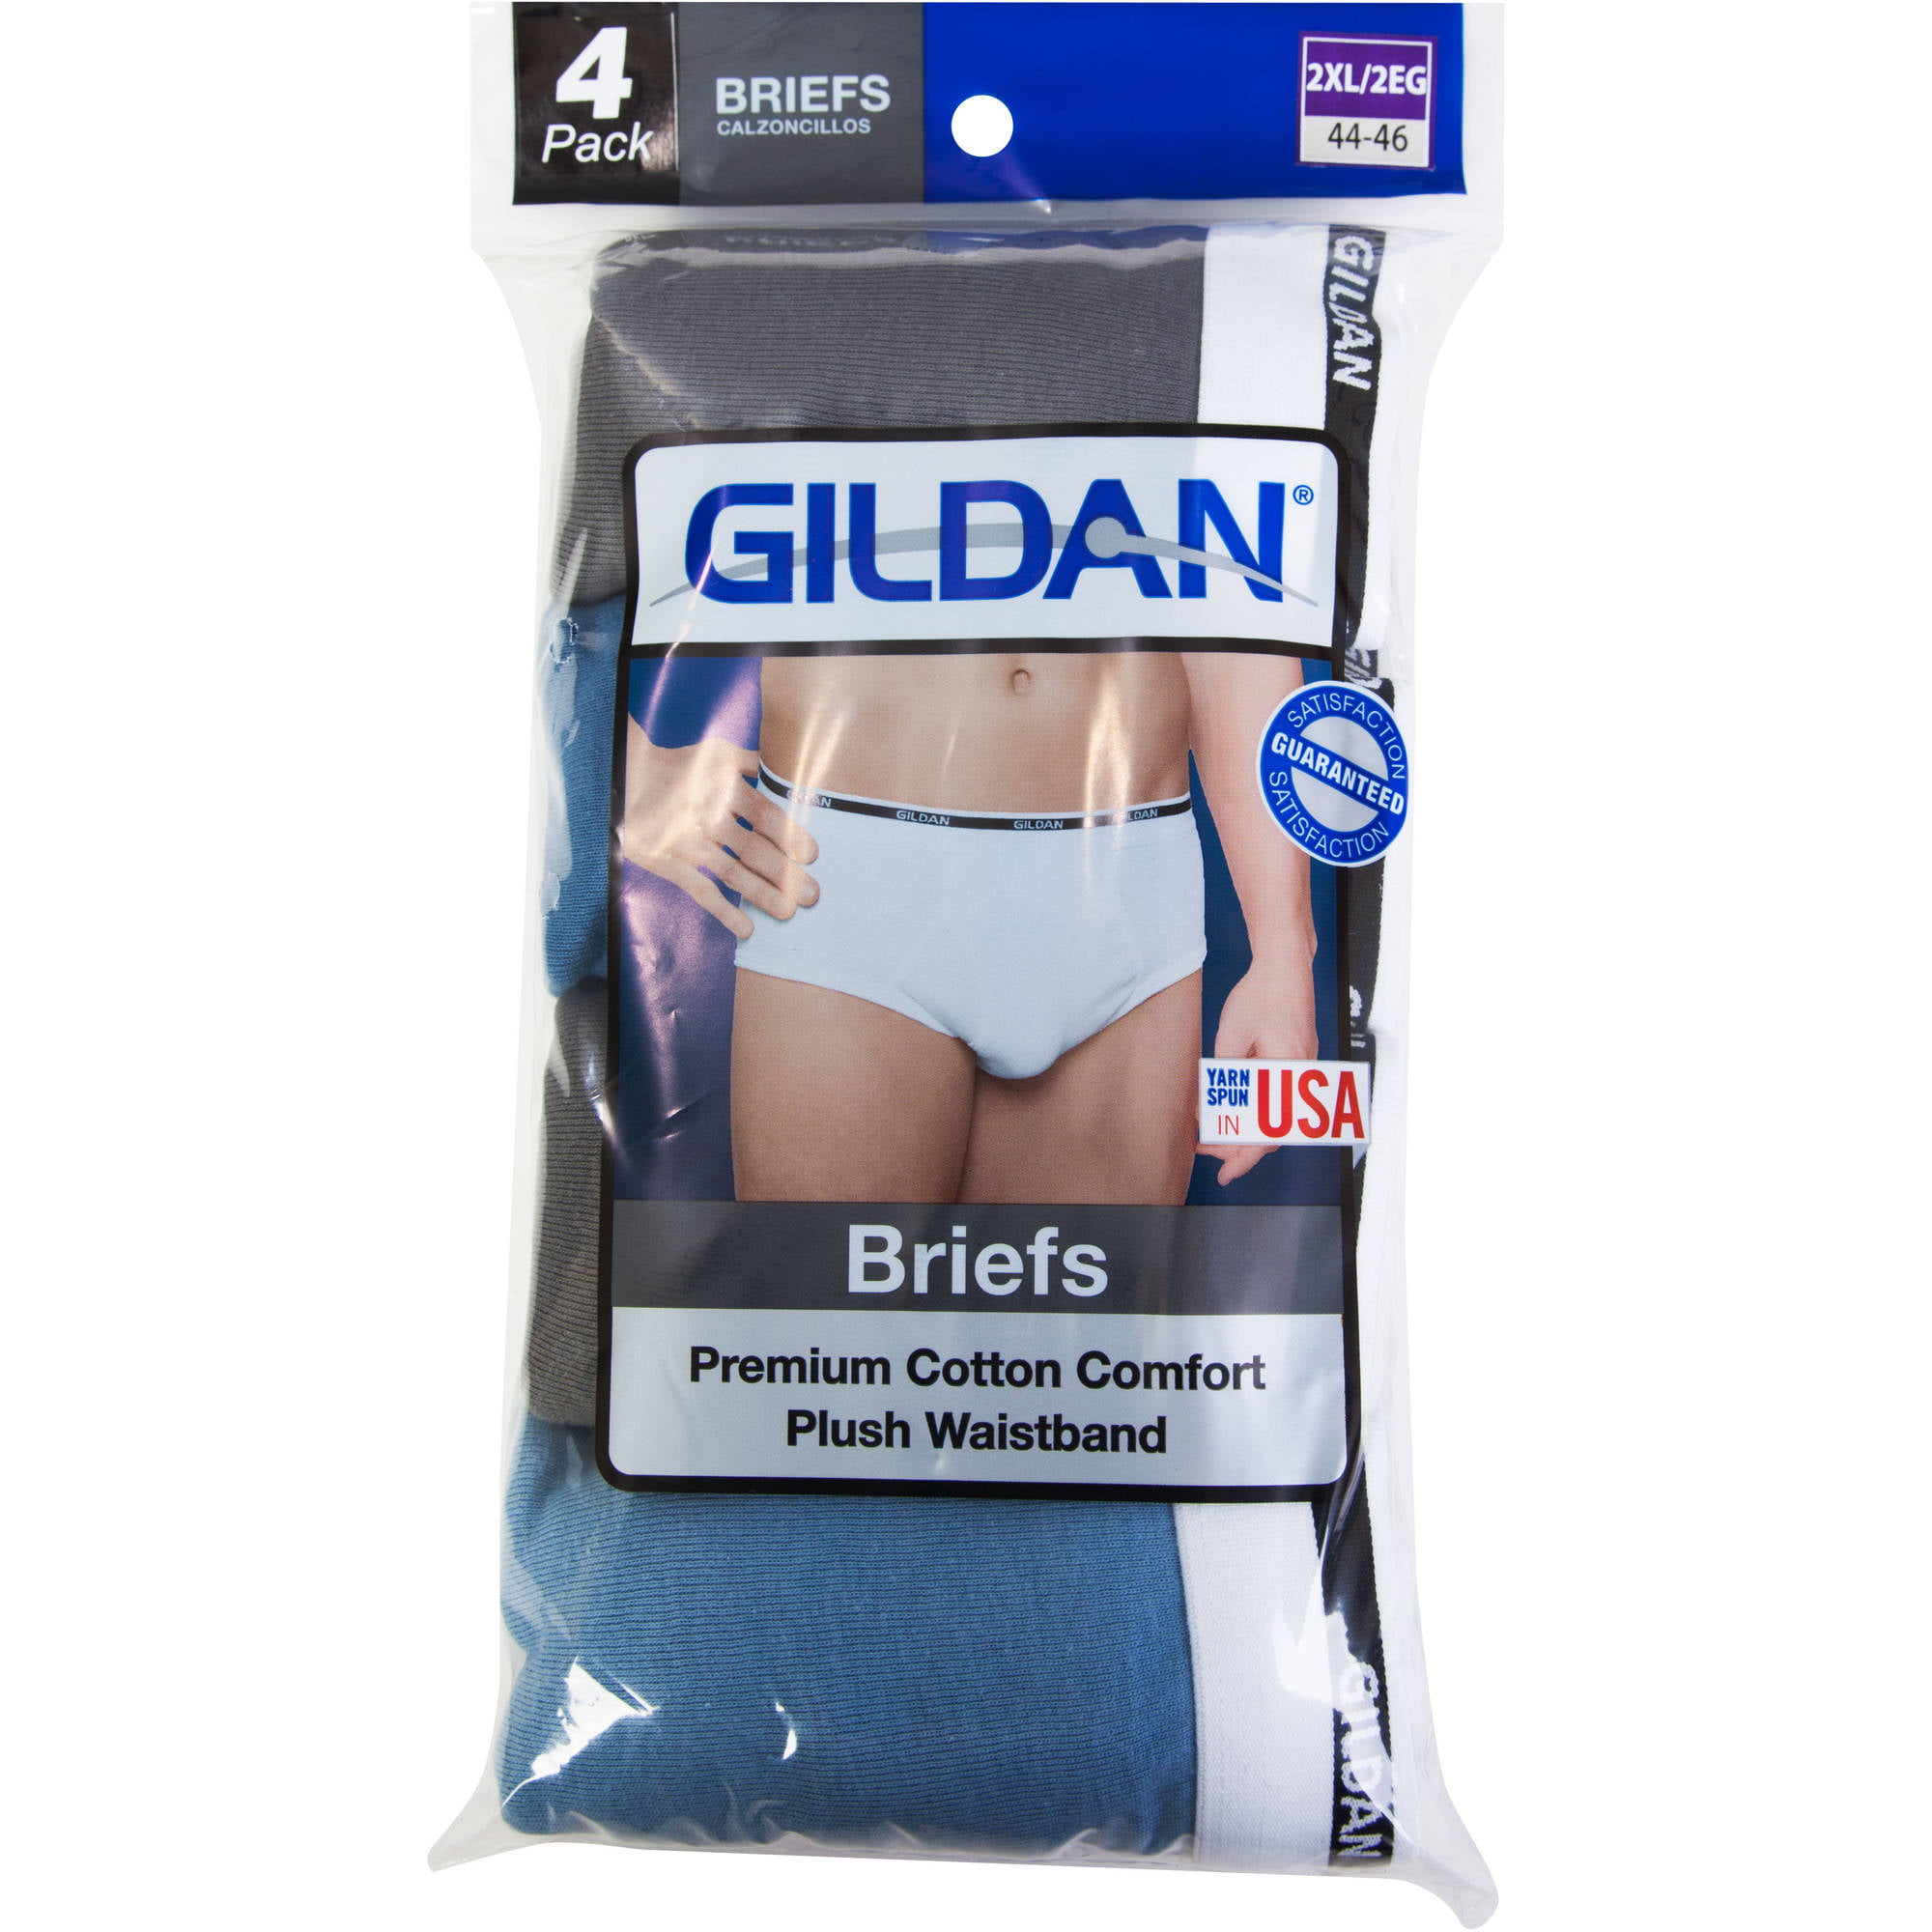 Gildan Adult Men's Woven Boxers, 10-Pack, Sizes S-2XL, 4.5 Inseam 